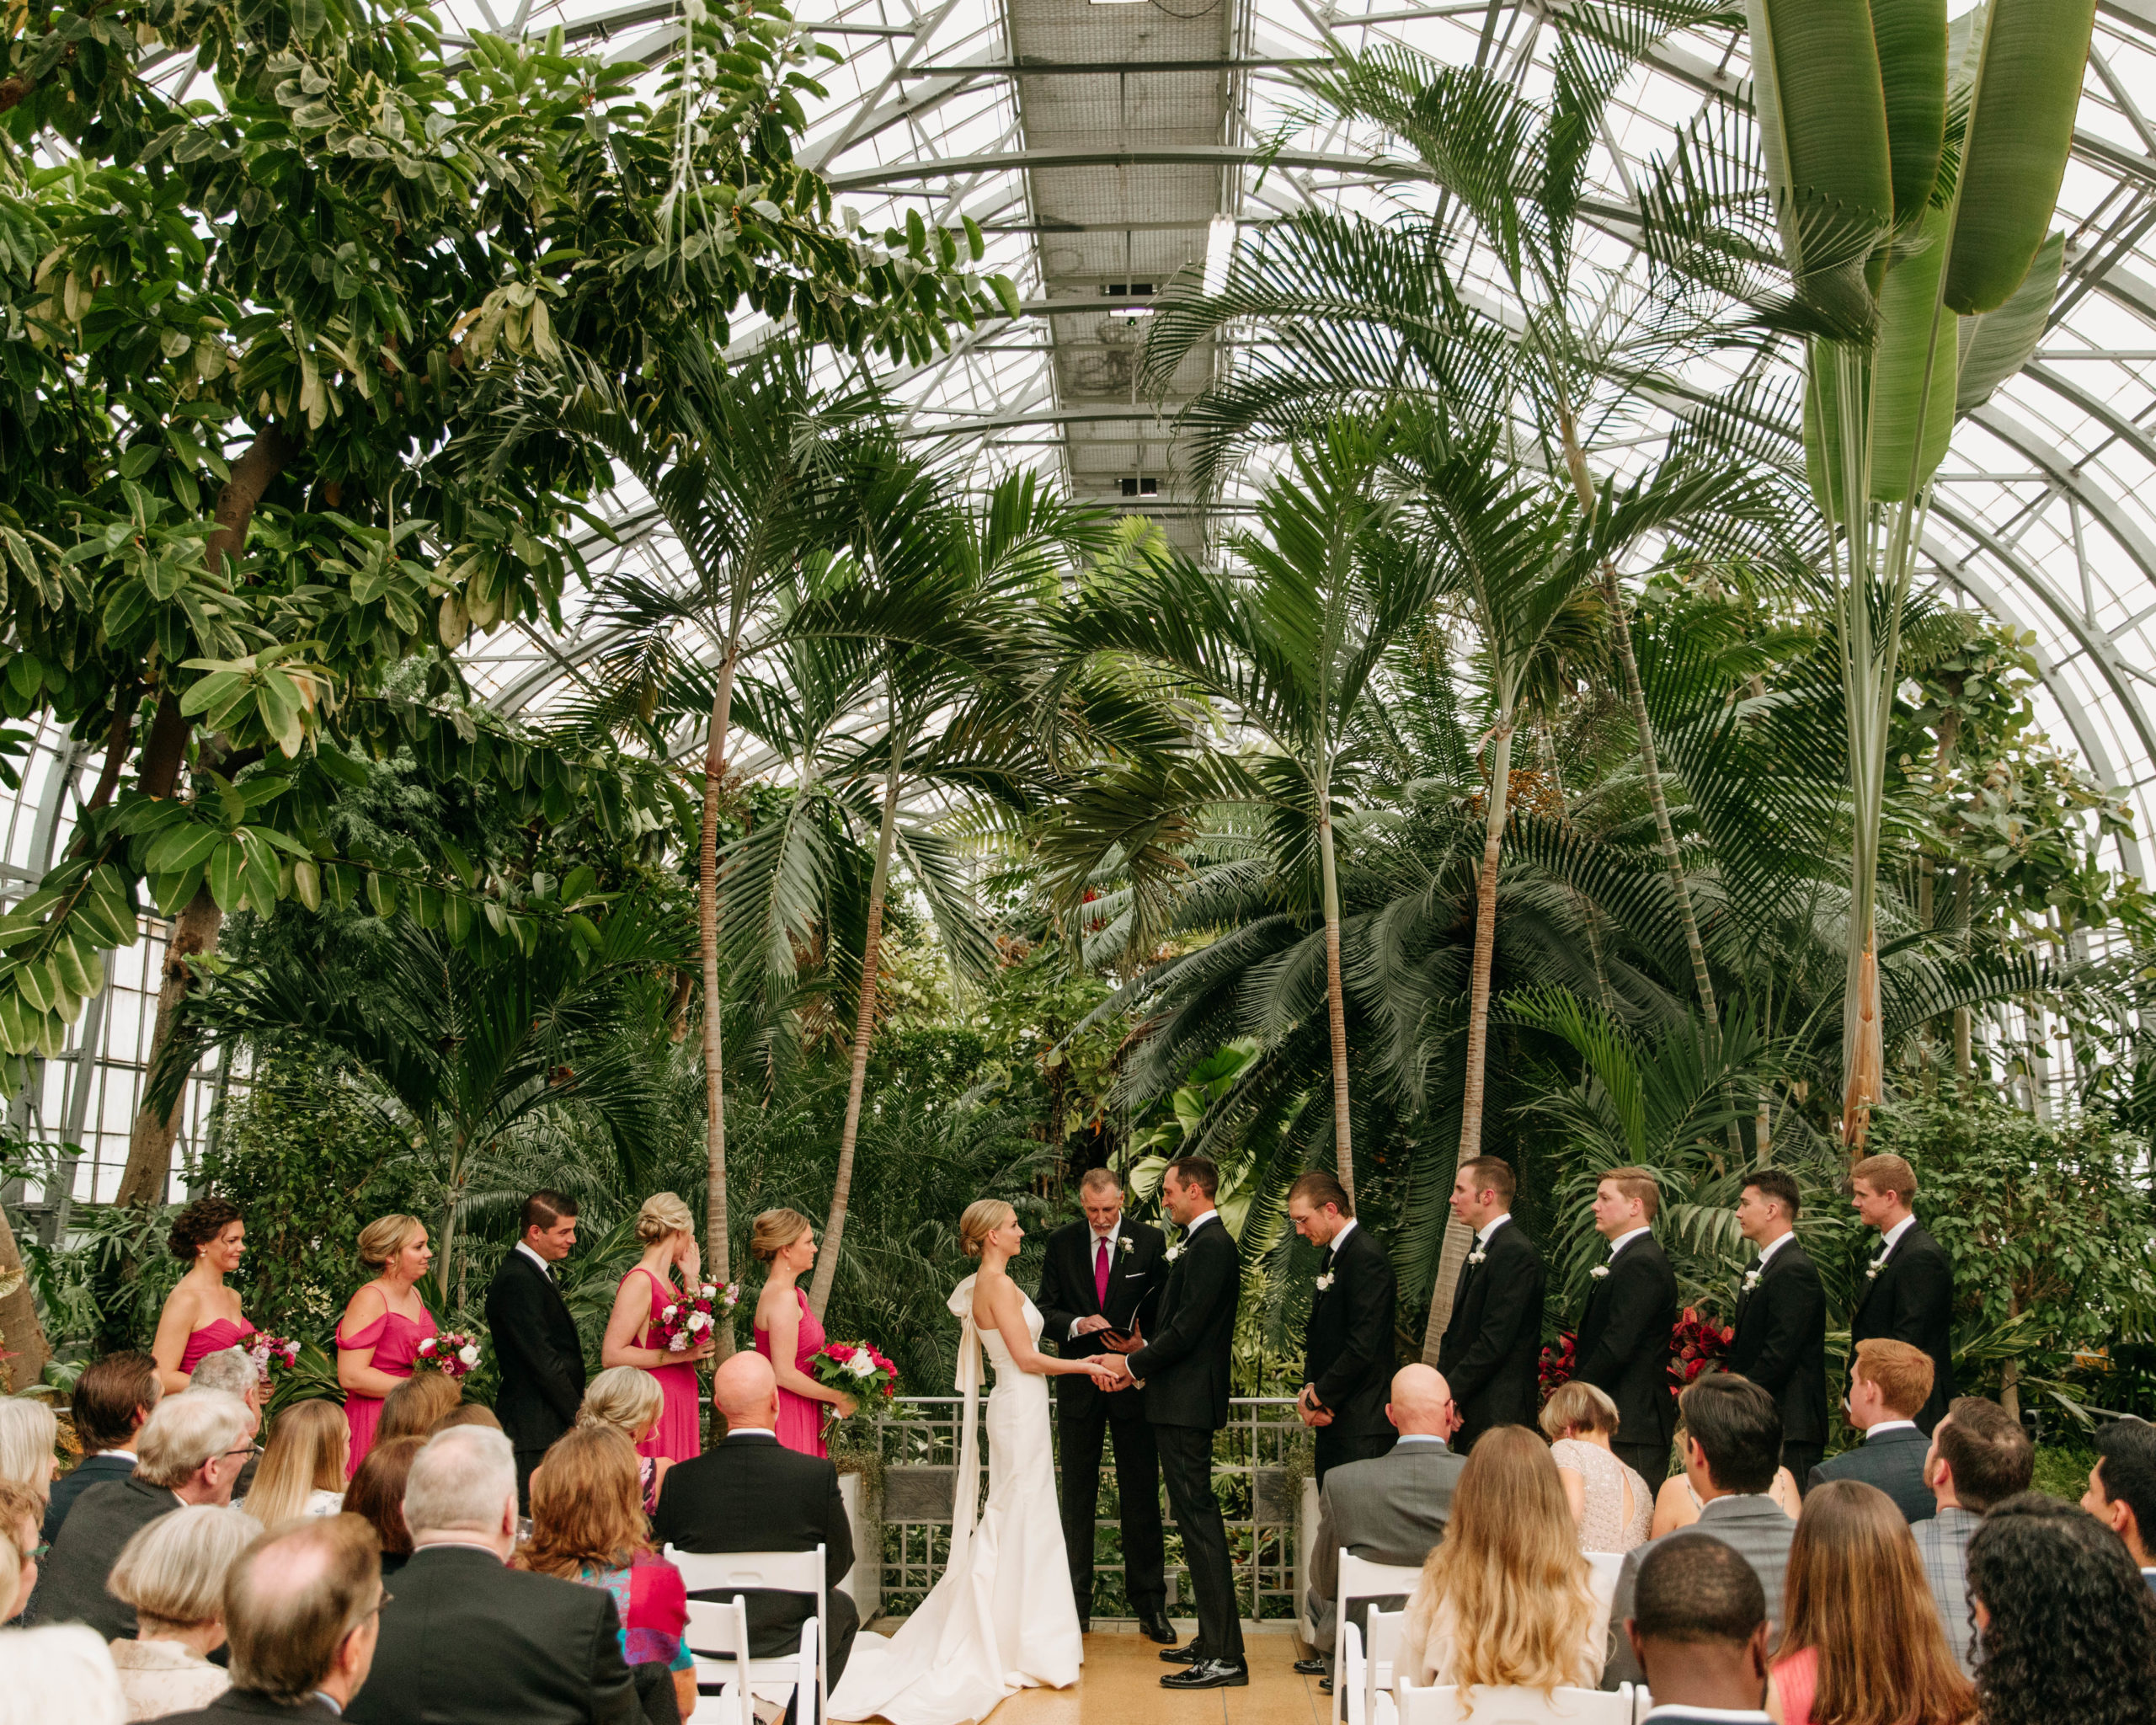 Wedding Ceremony at Krohn conservatory in Eden Park, Cincinnati Ohio